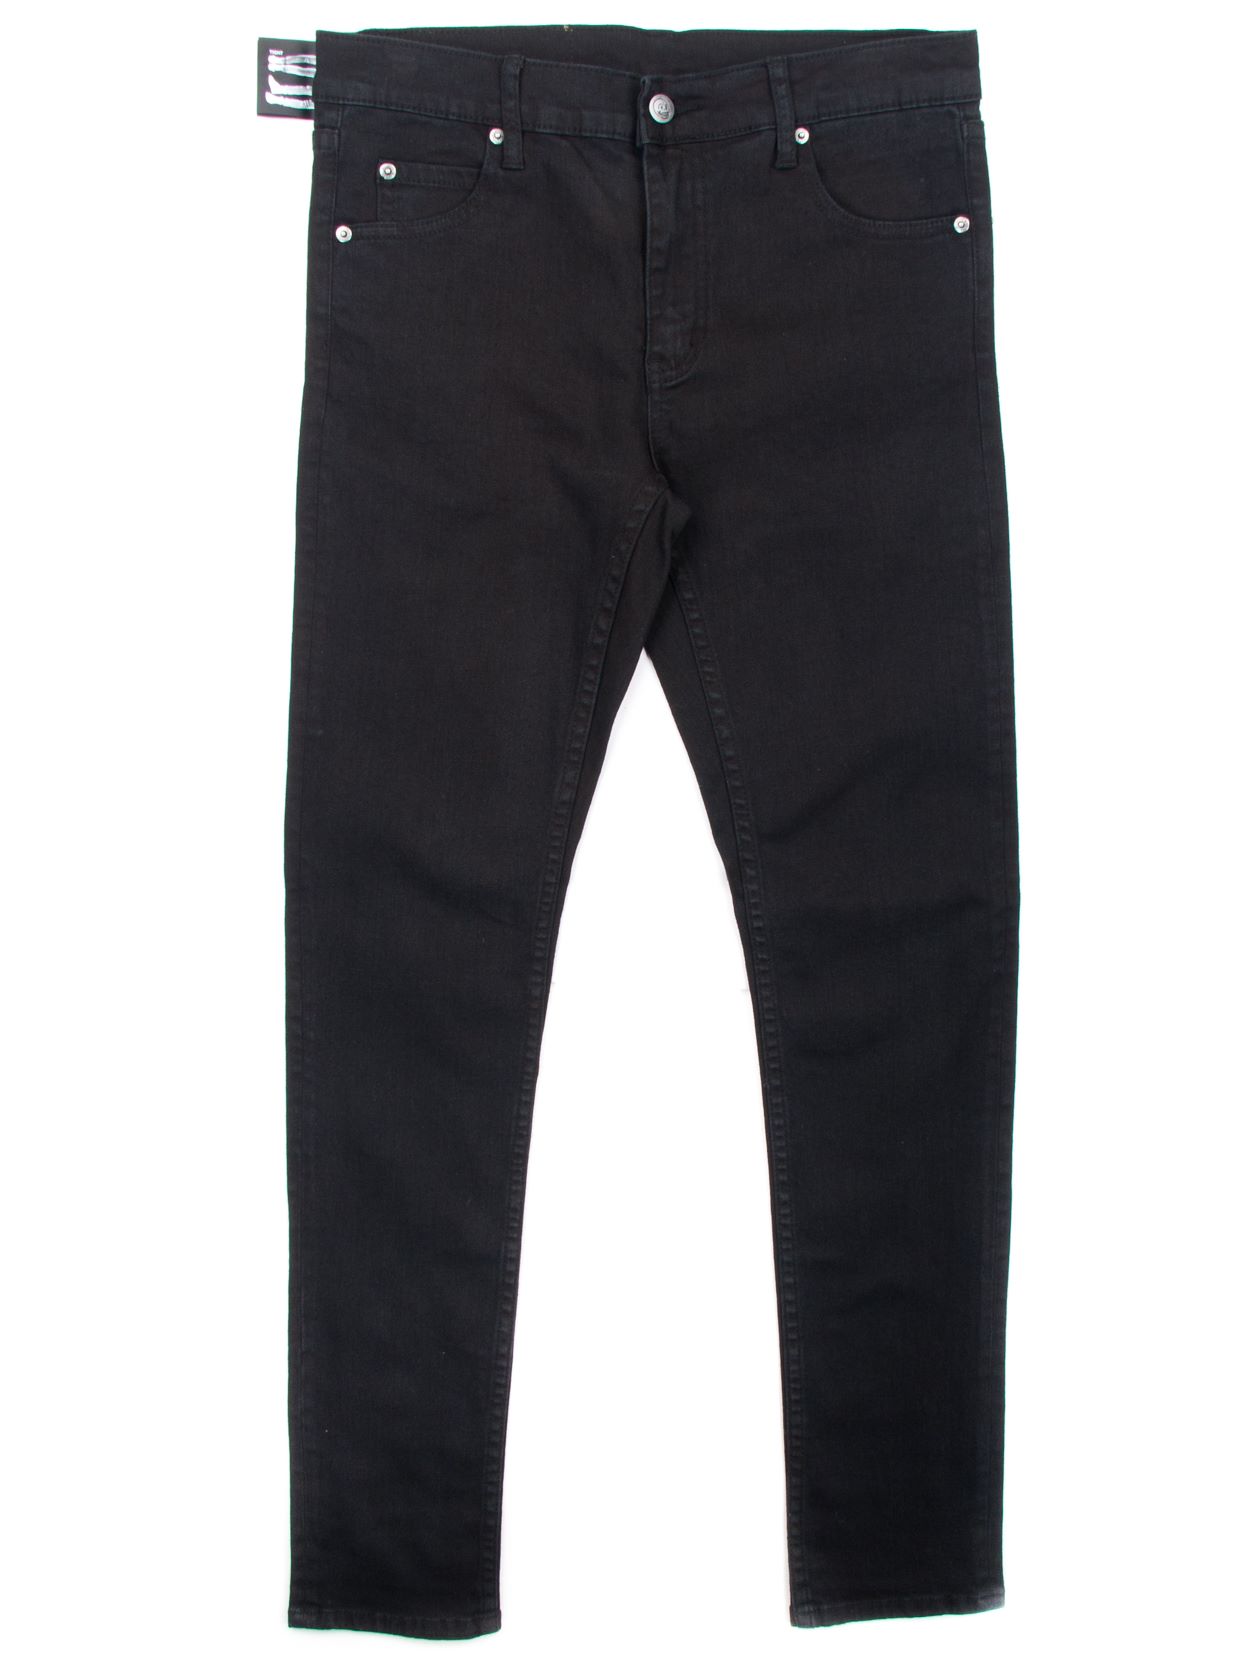 Cheap Monday Tight New Black Denim Jeans | Dapper Street